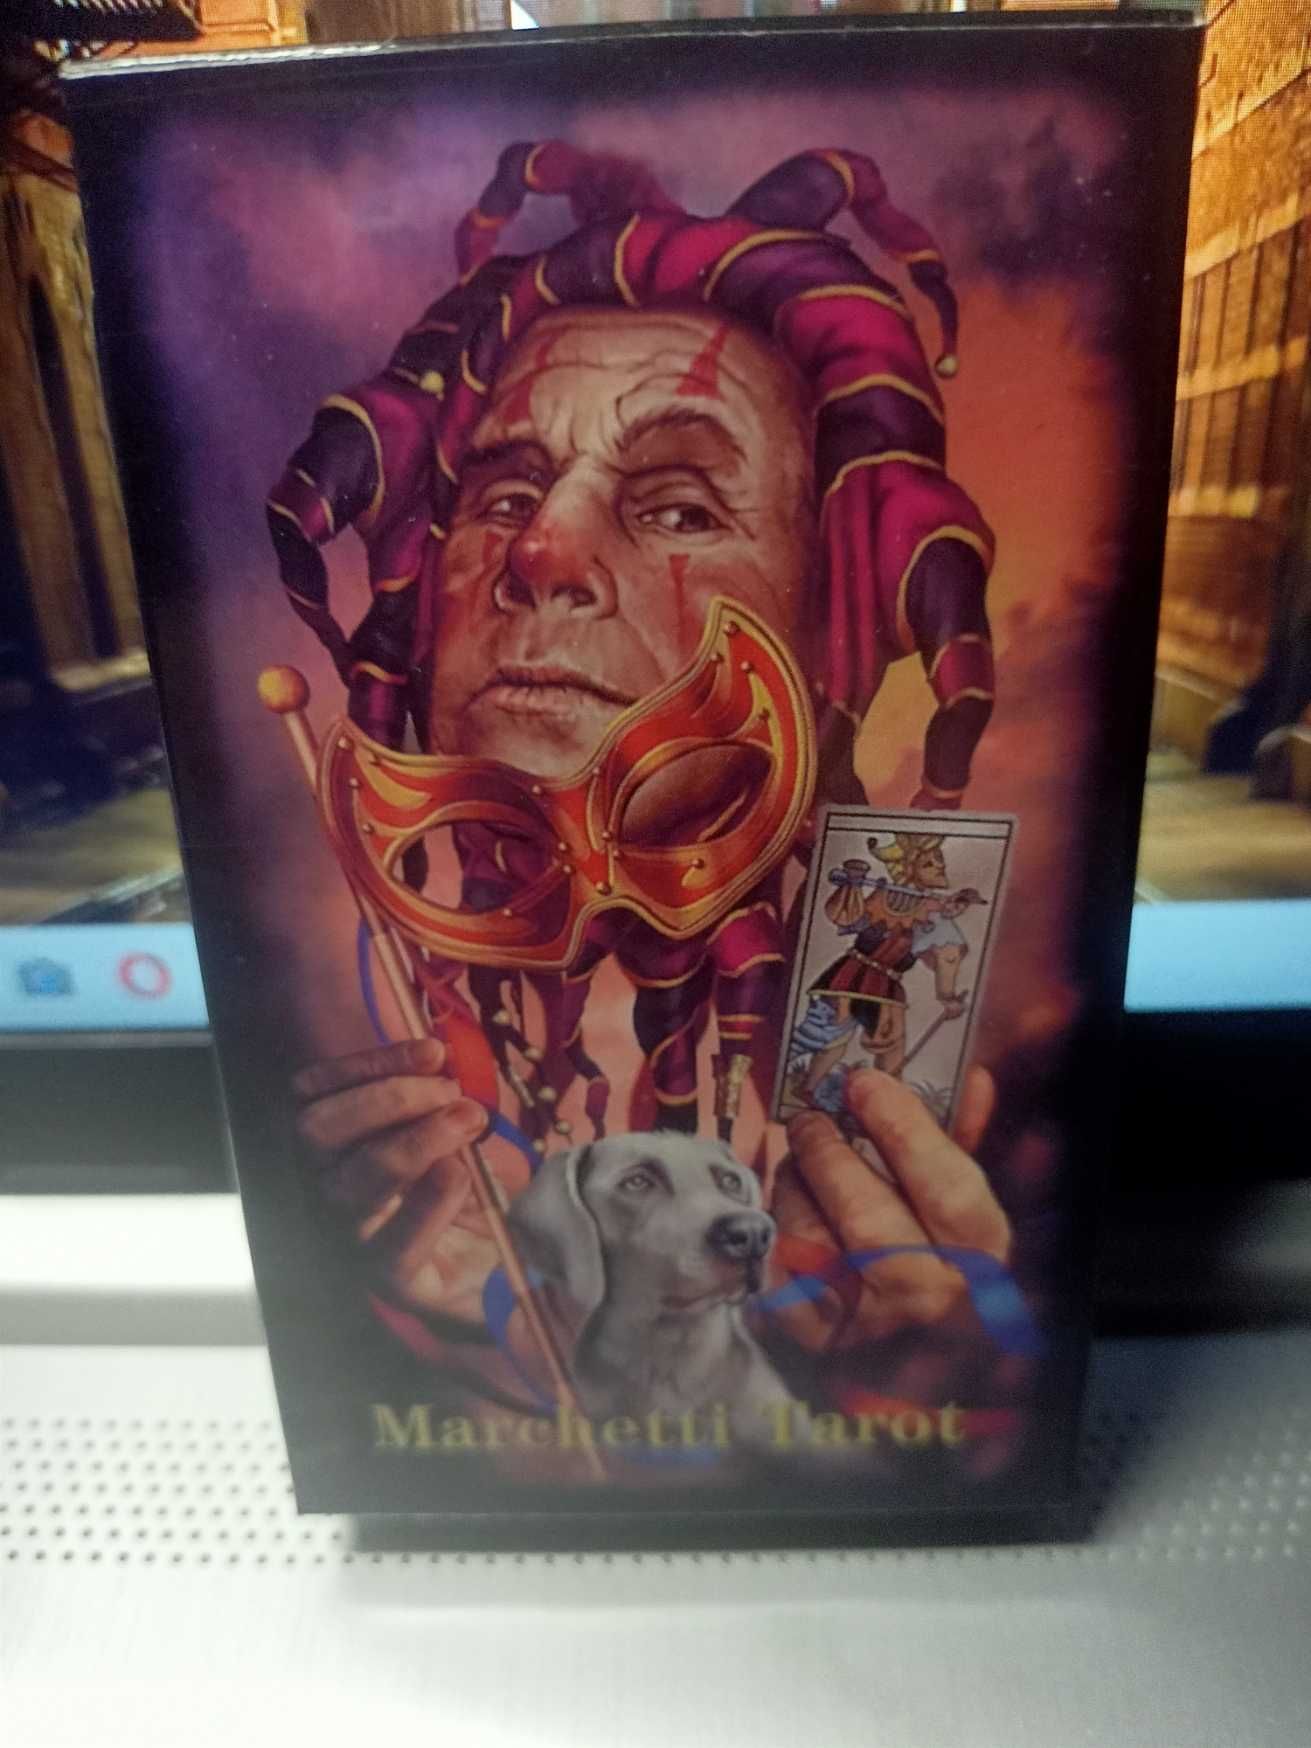 Marchetti,The Linestrider, Madhouse, Granny’s Postcards Tarot